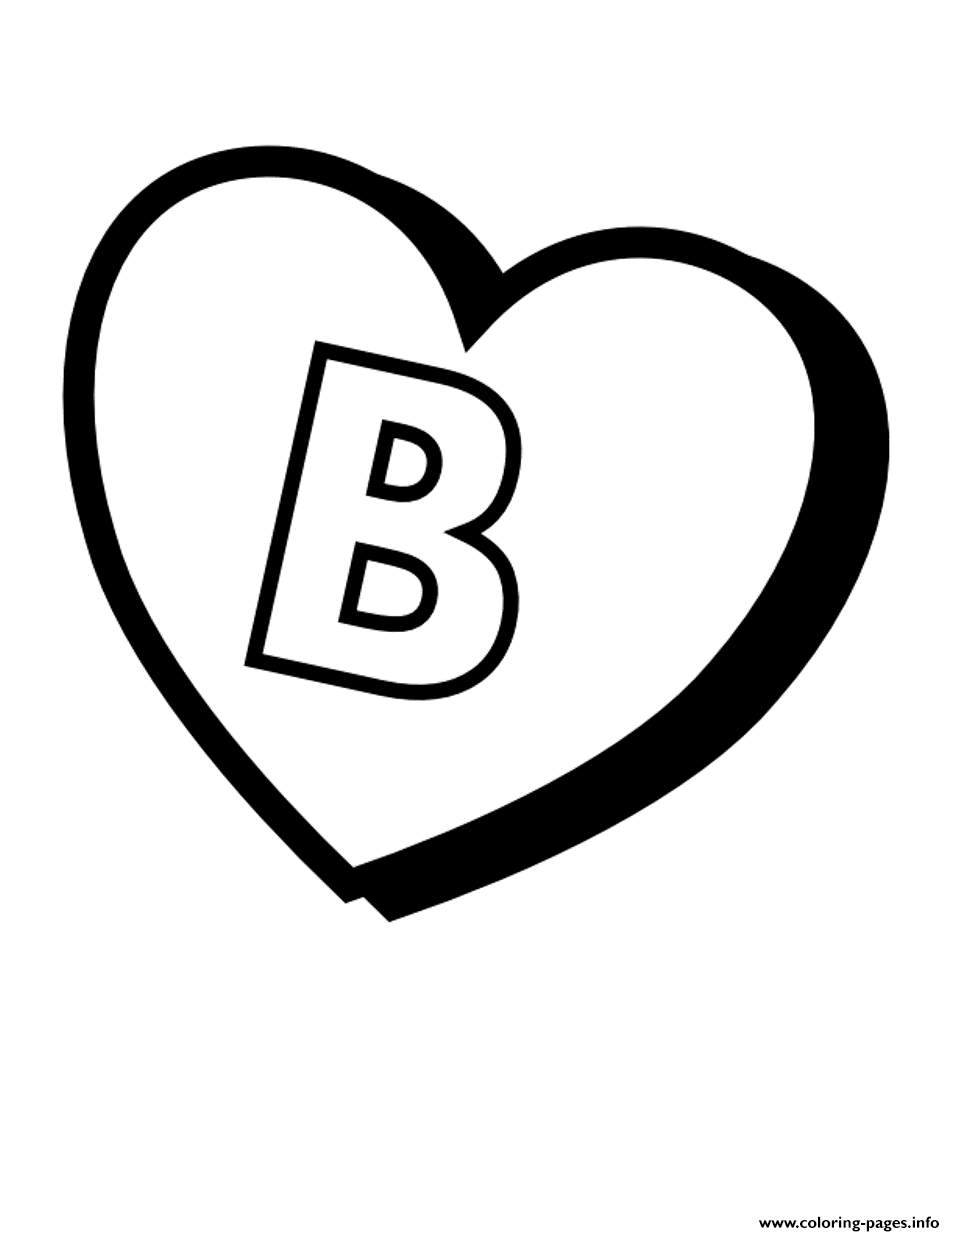 Valentines Day B Alphabet S8097 coloring